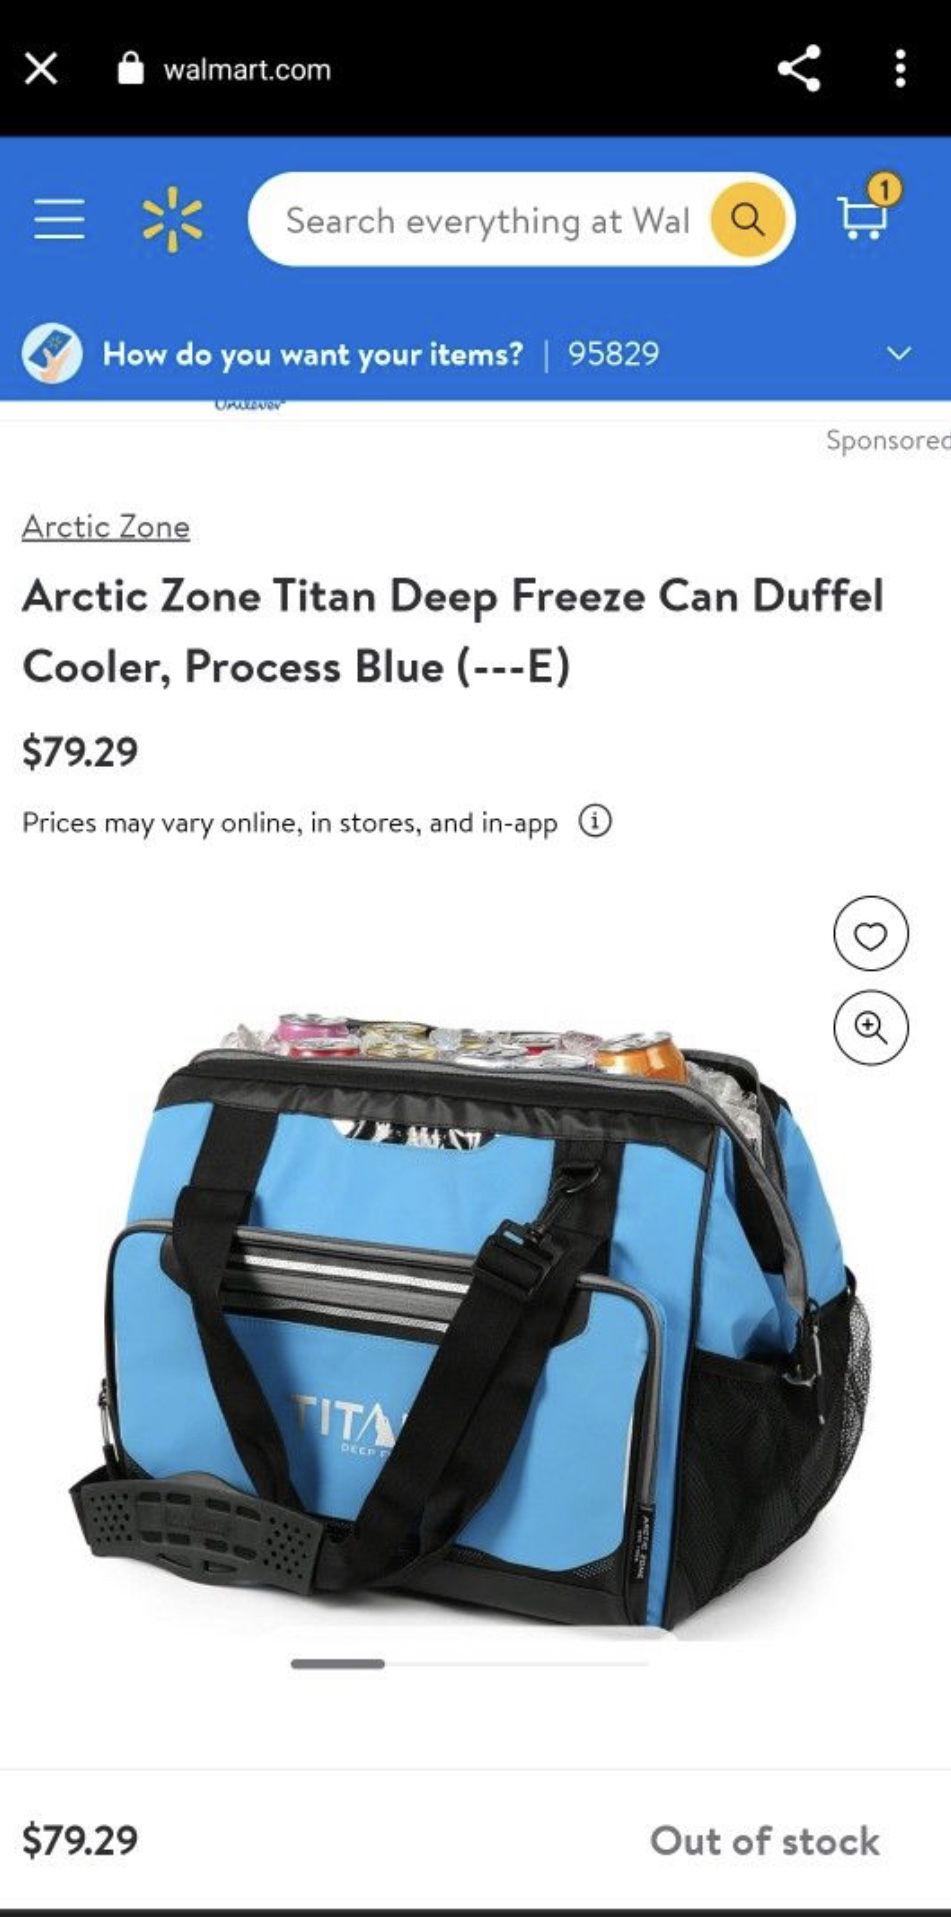 Arctic Zone Titan Deep Freeze Can Duffel Cooler, Process Blue